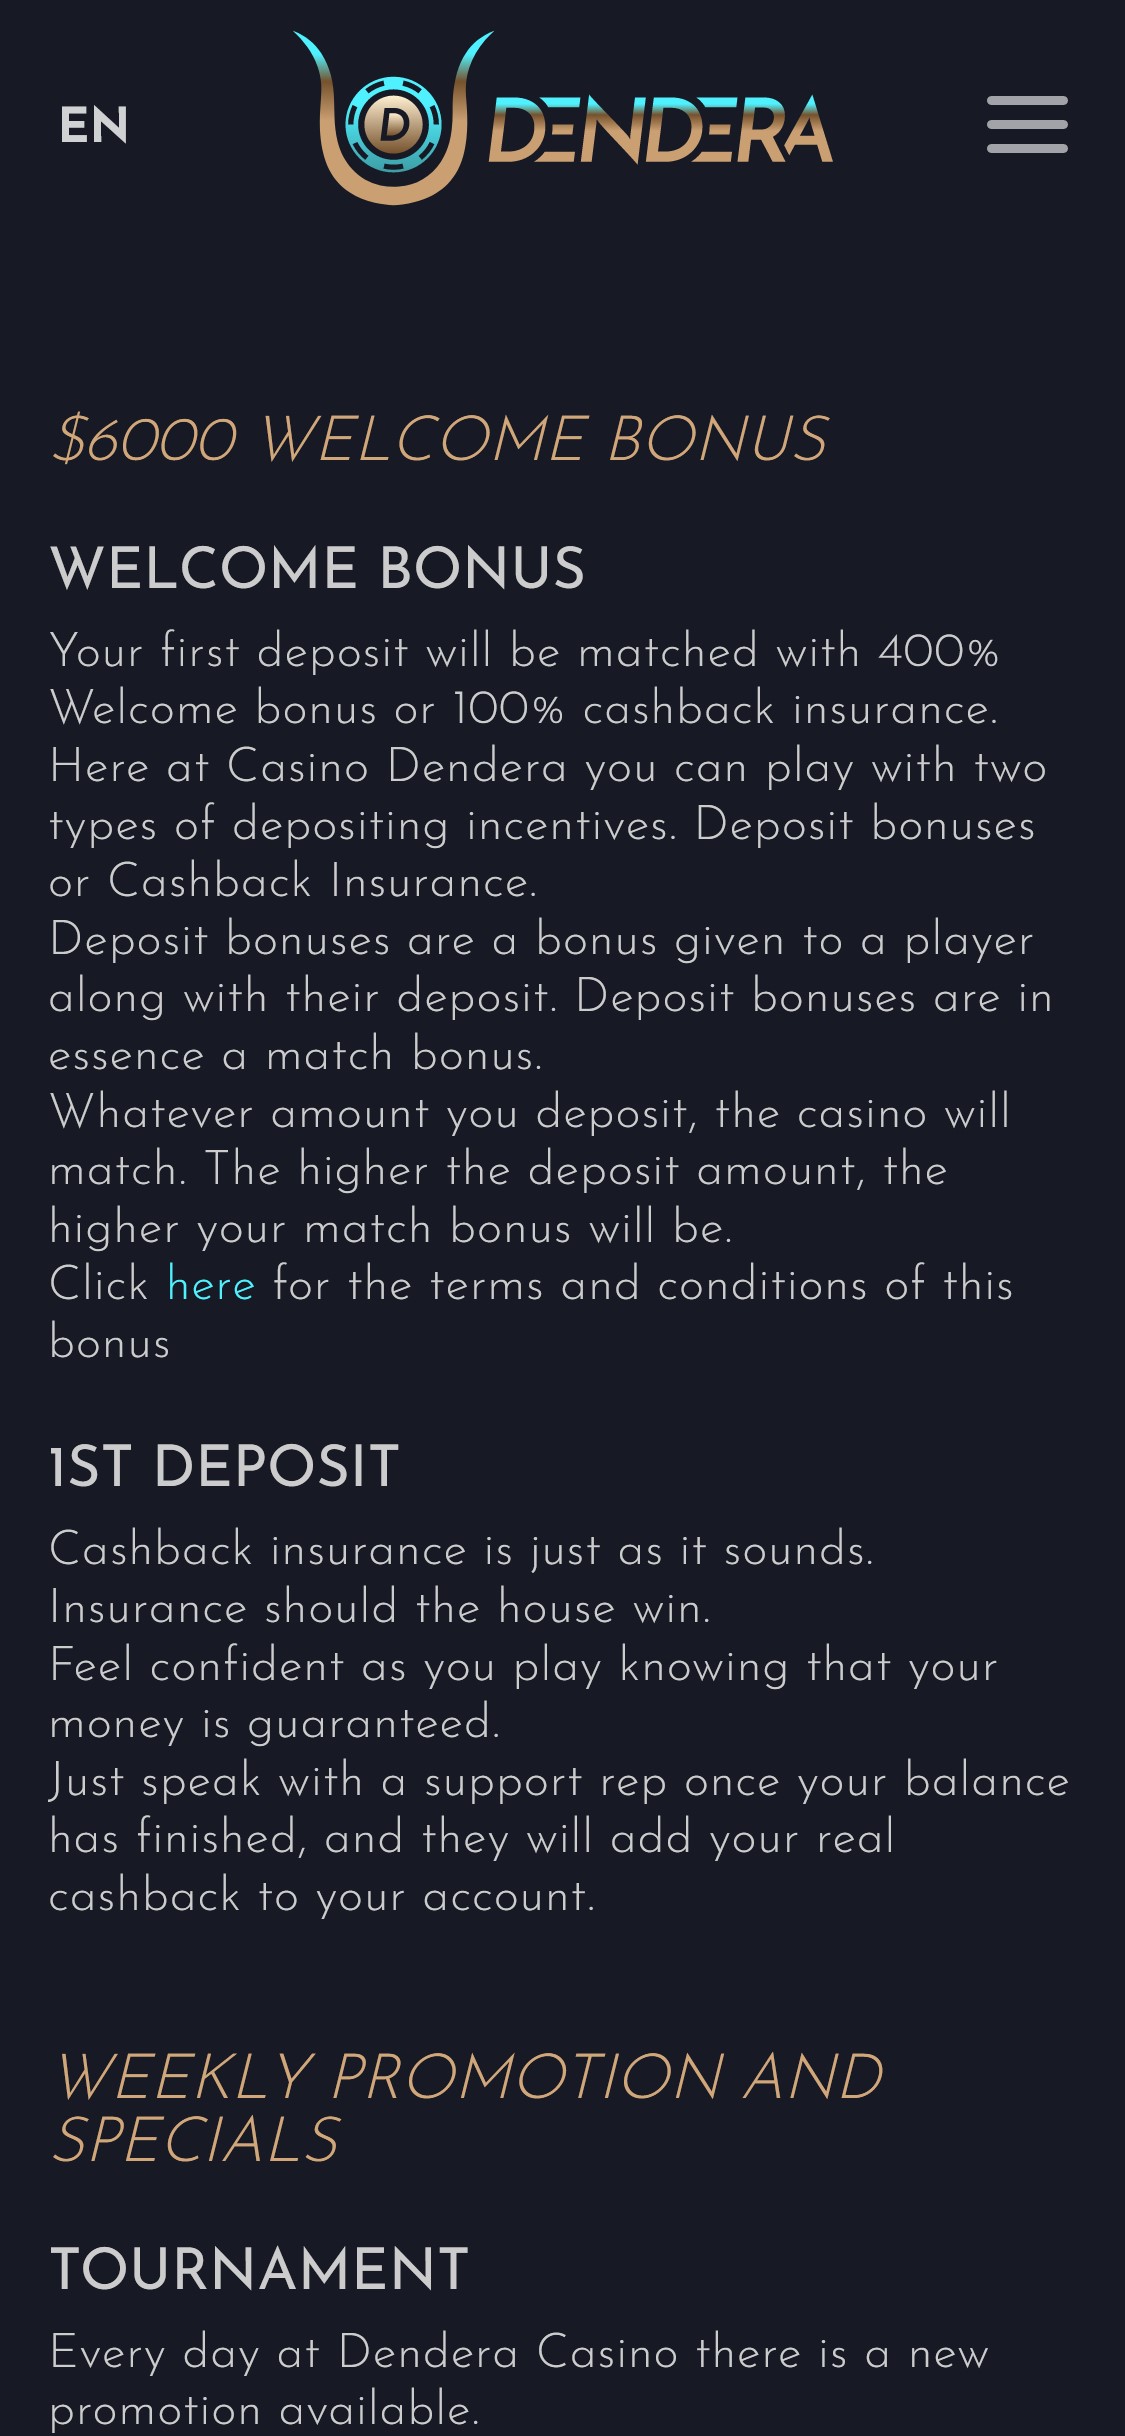 Dendera Casino Mobile No Deposit Bonus Review